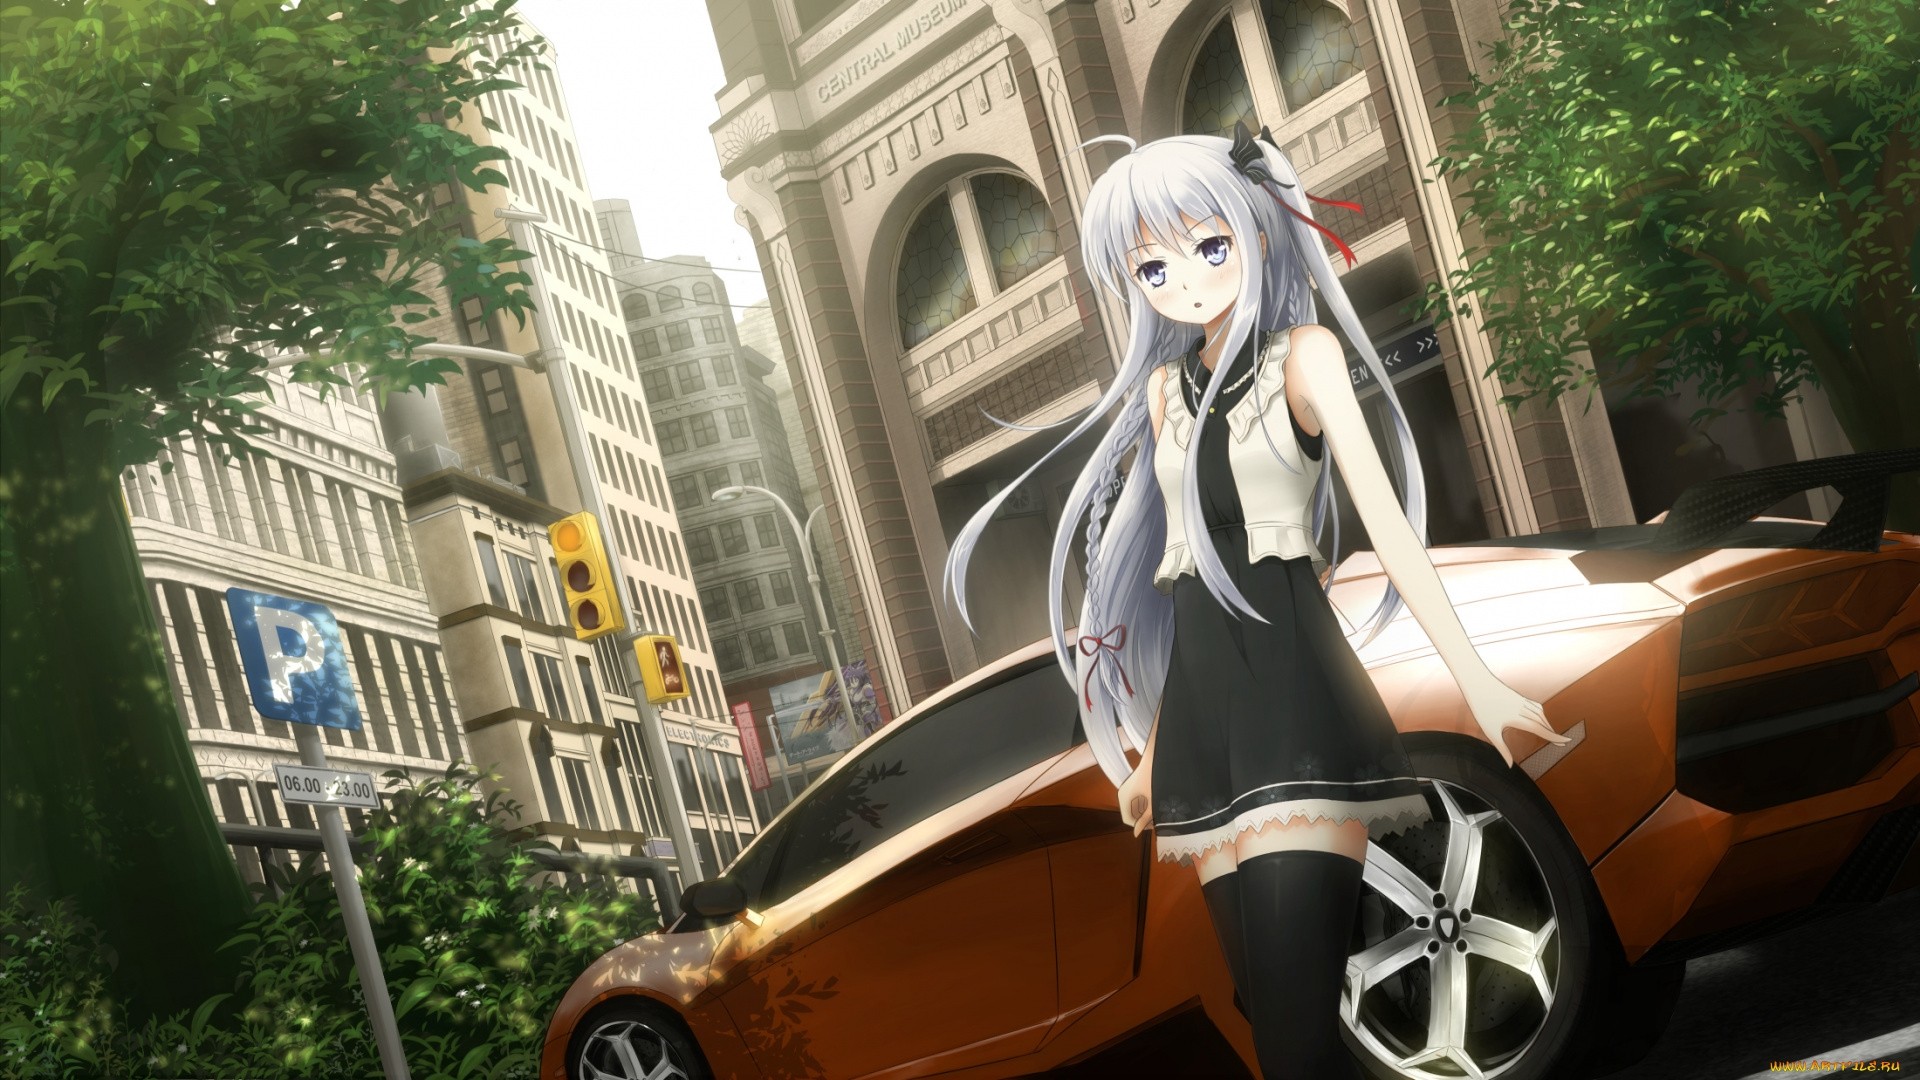 Anime Girl With Car Wallpaper Image